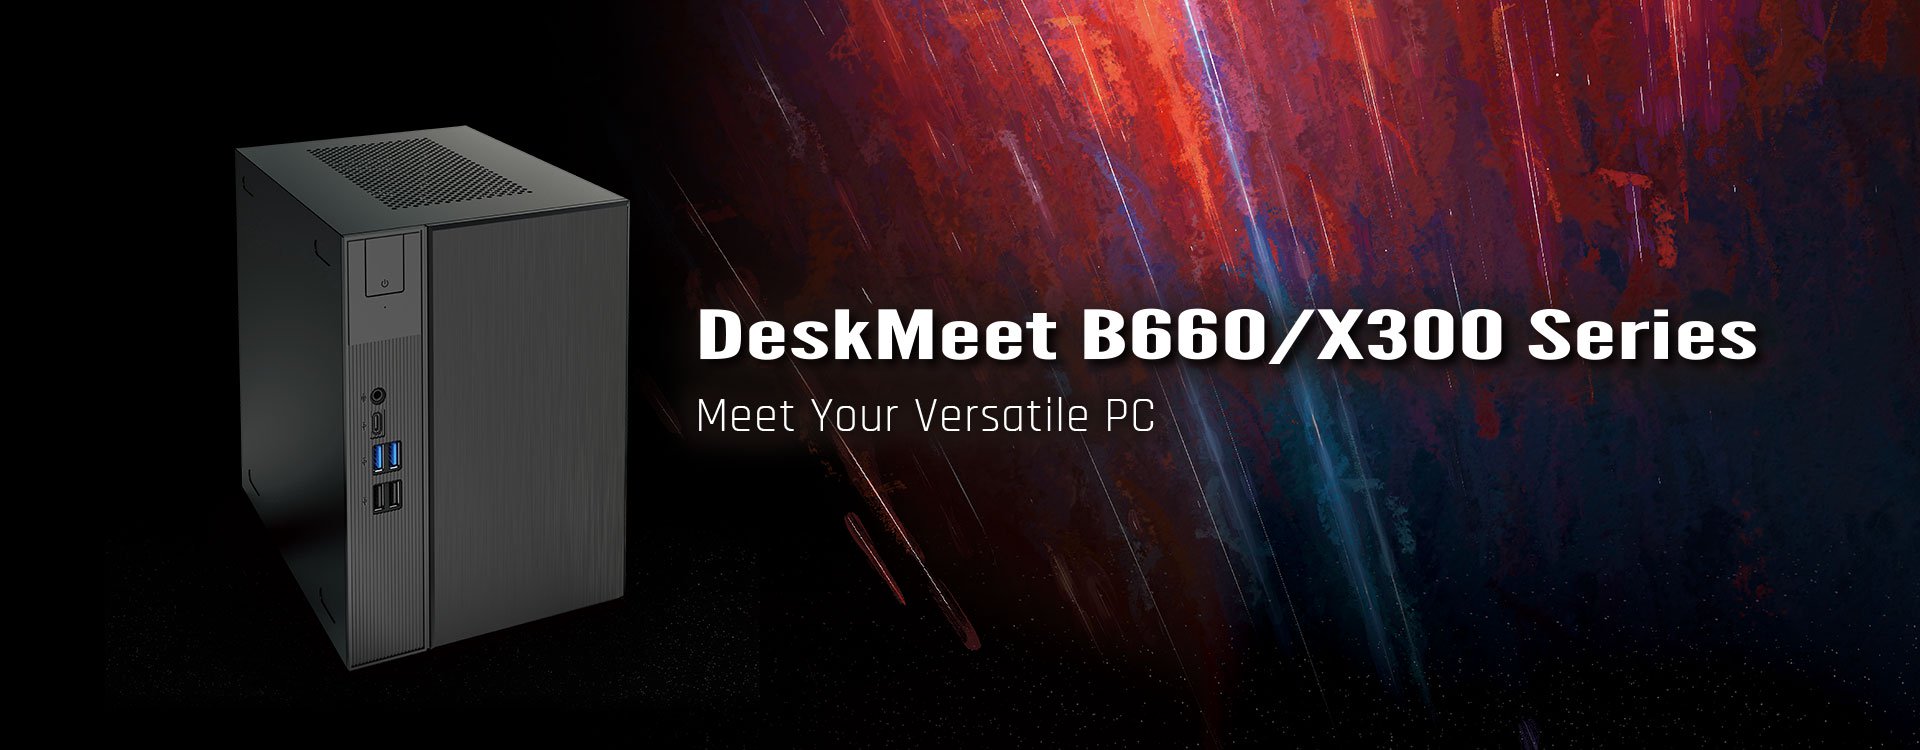 DeskMeet B660 Series